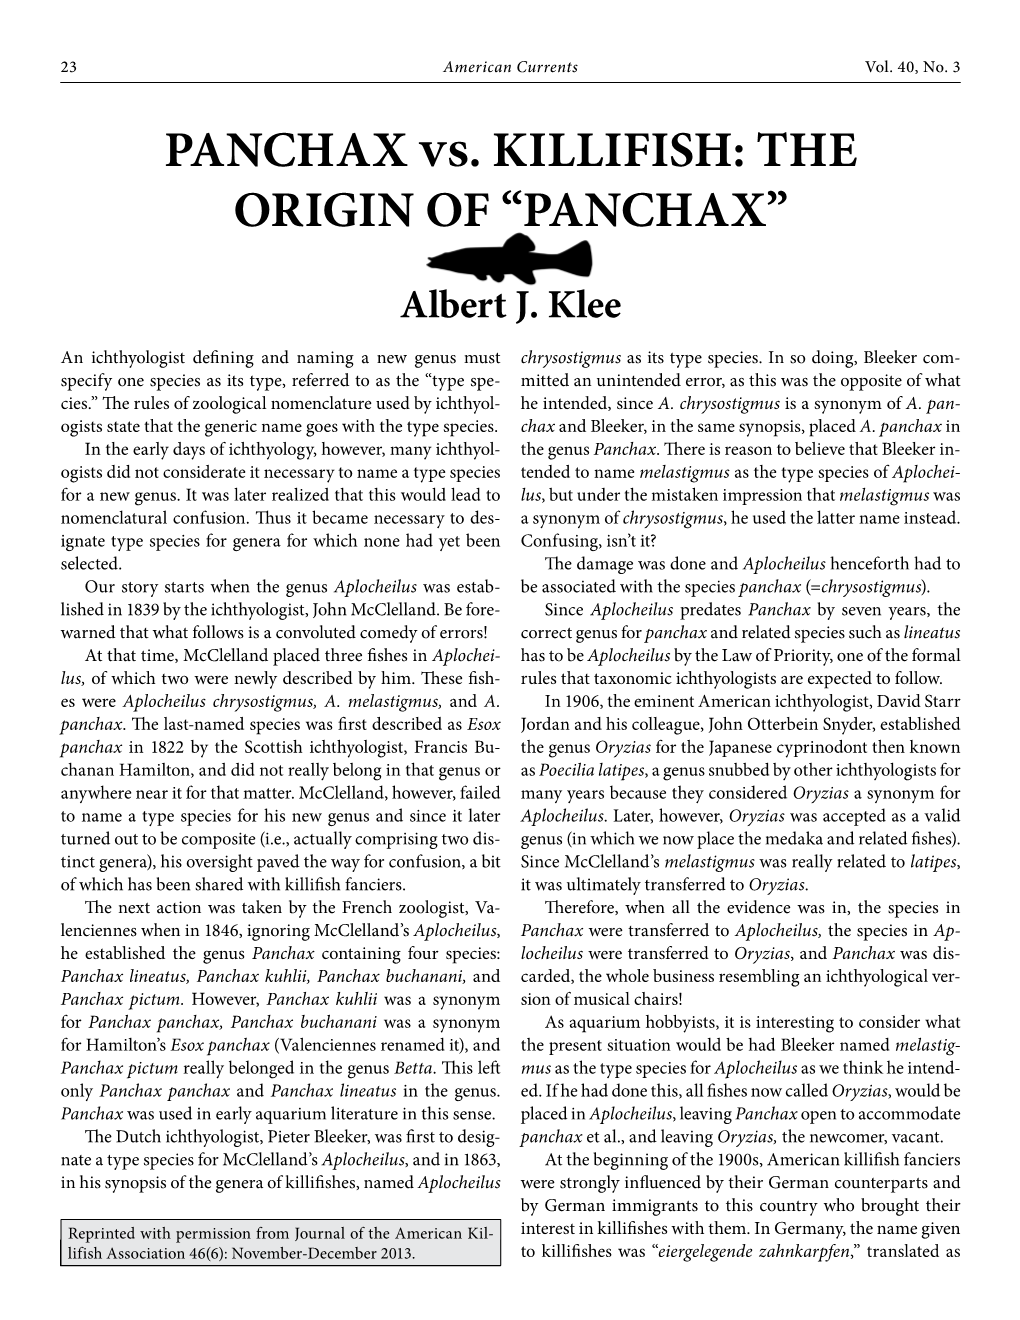 PANCHAX Vs. KILLIFISH: the ORIGIN of “PANCHAX”